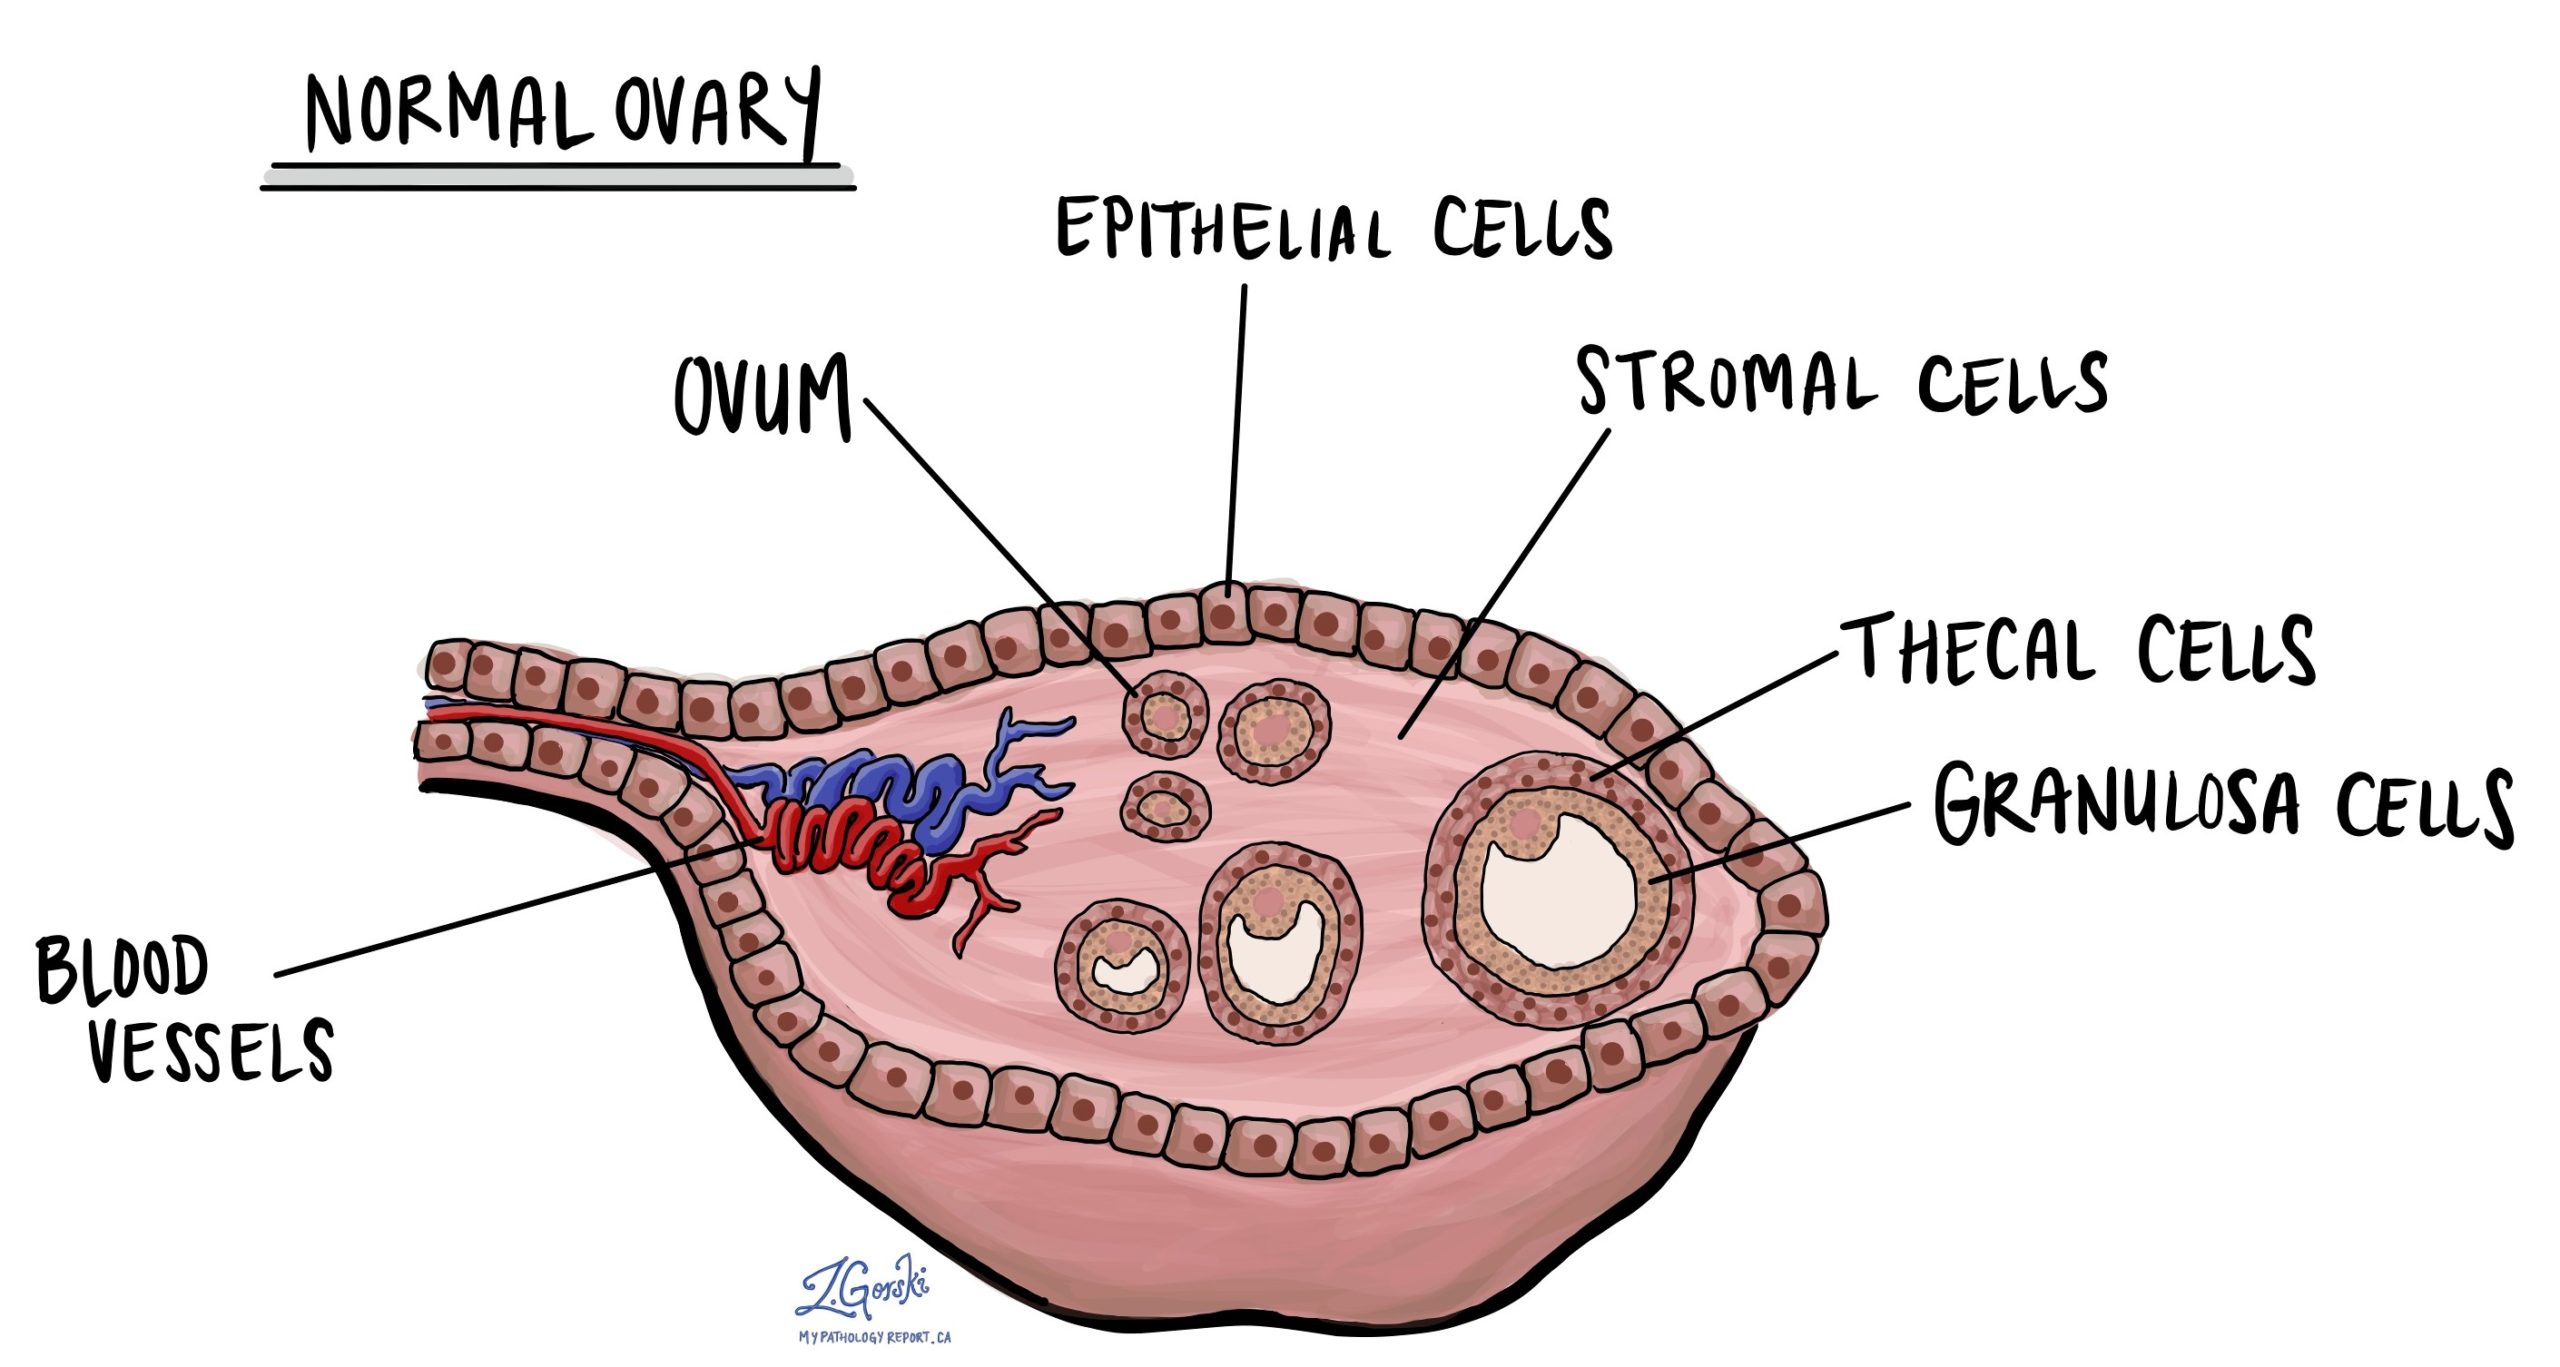 Normal ovary